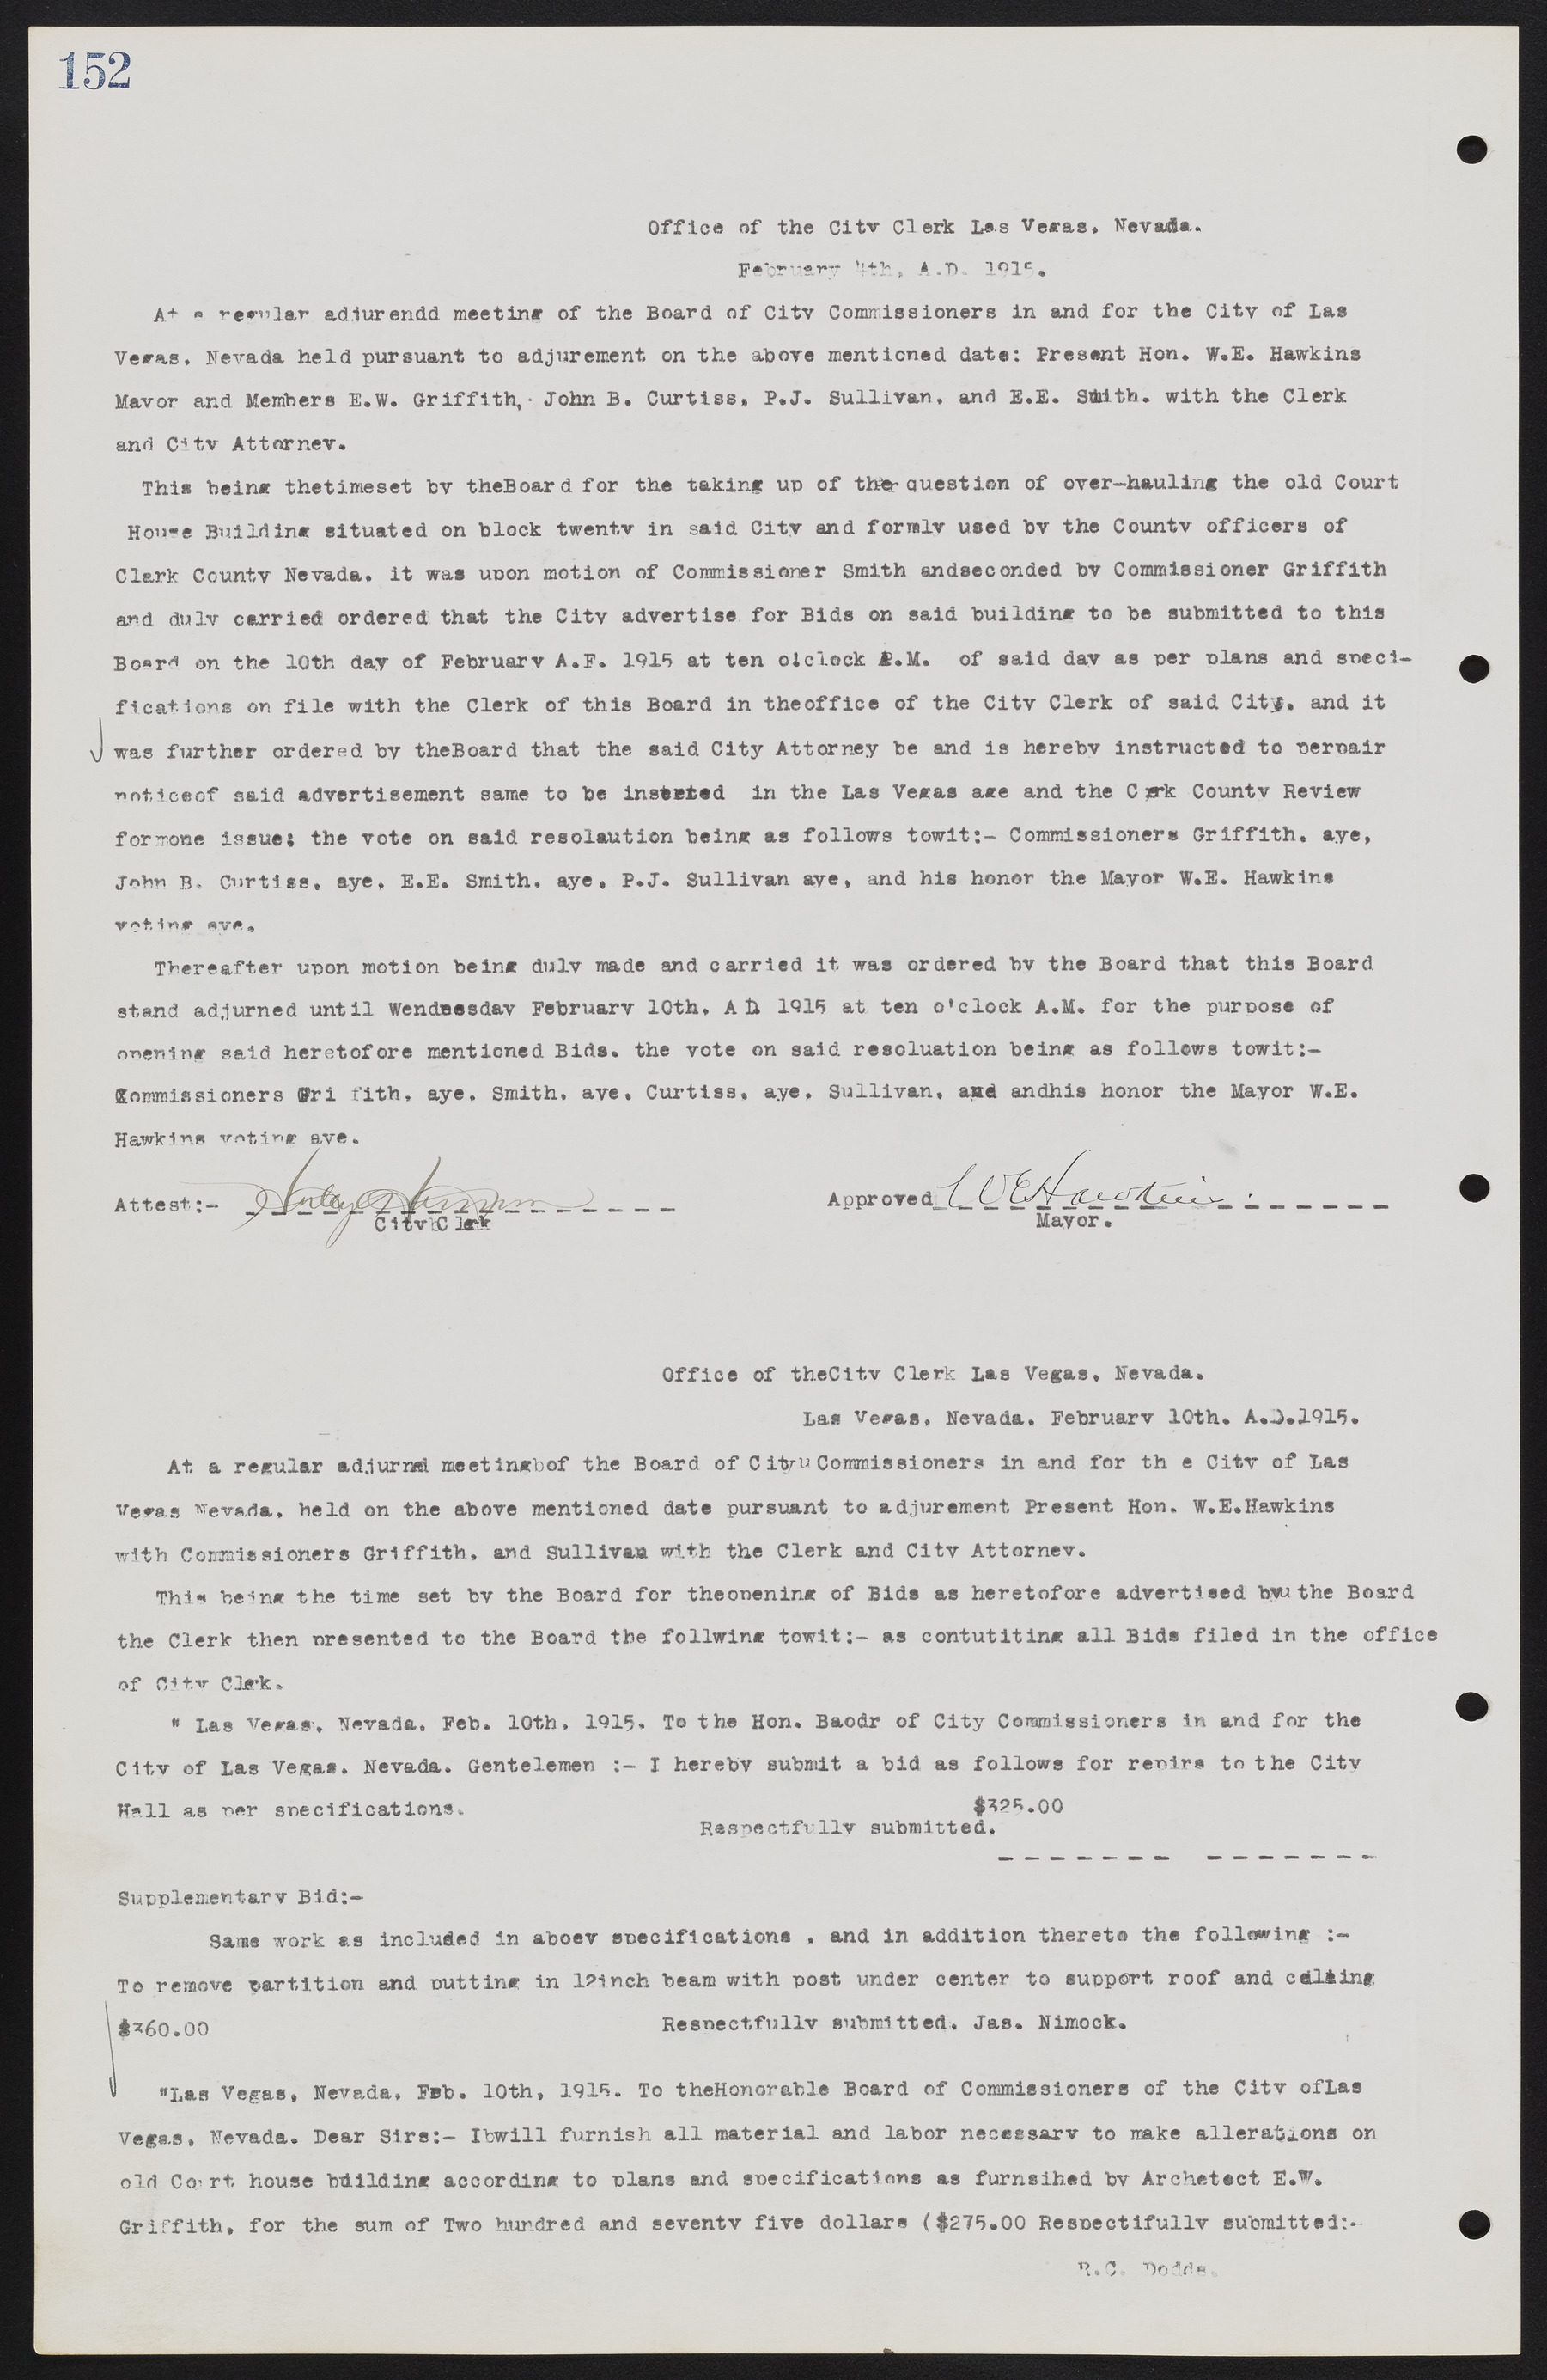 Las Vegas City Commission Minutes, June 22, 1911 to February 7, 1922, lvc000001-168